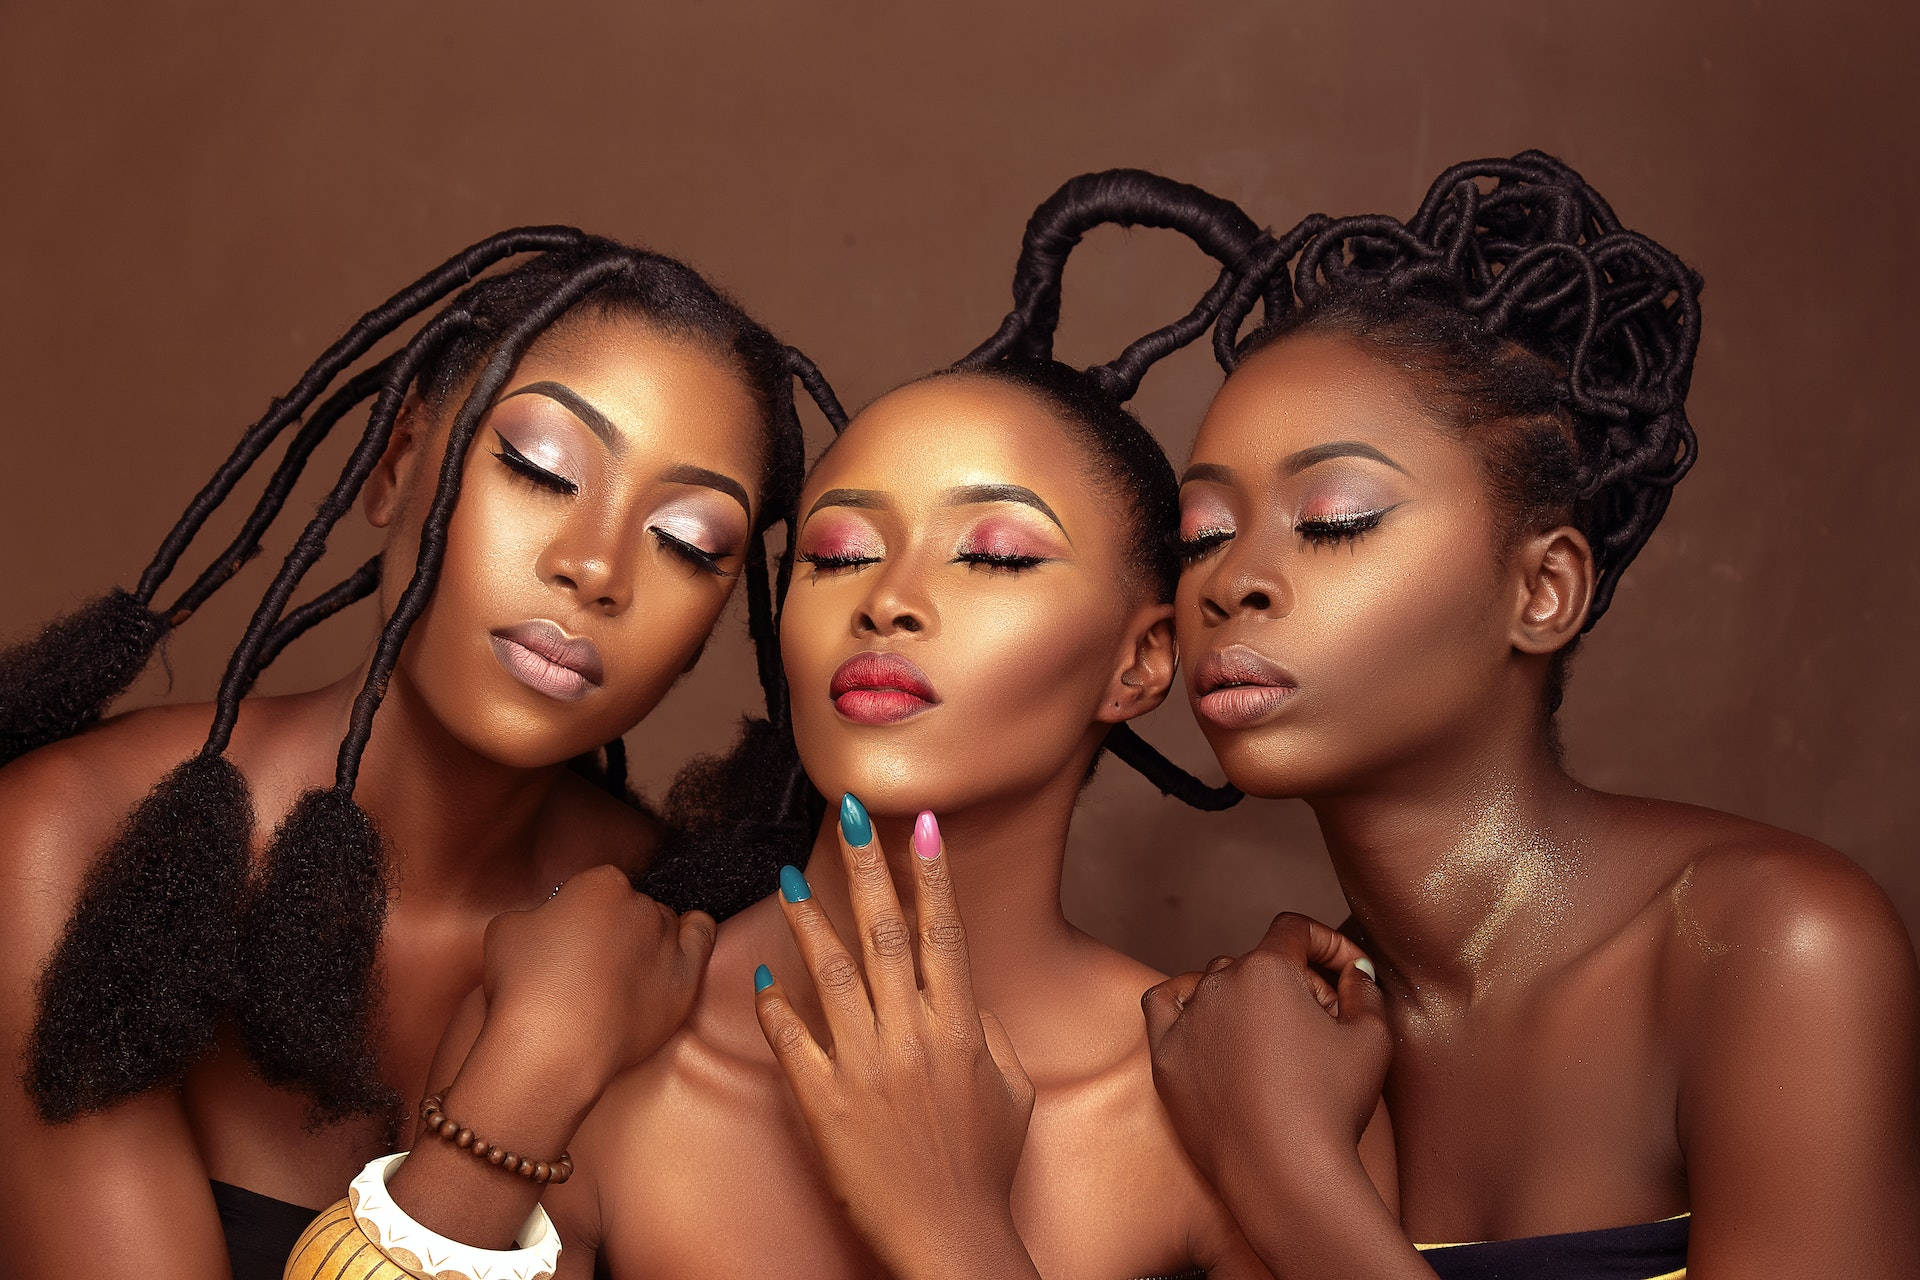 Free Sexy Black Women Wallpaper Downloads, [100+] Sexy Black Women  Wallpapers for FREE 